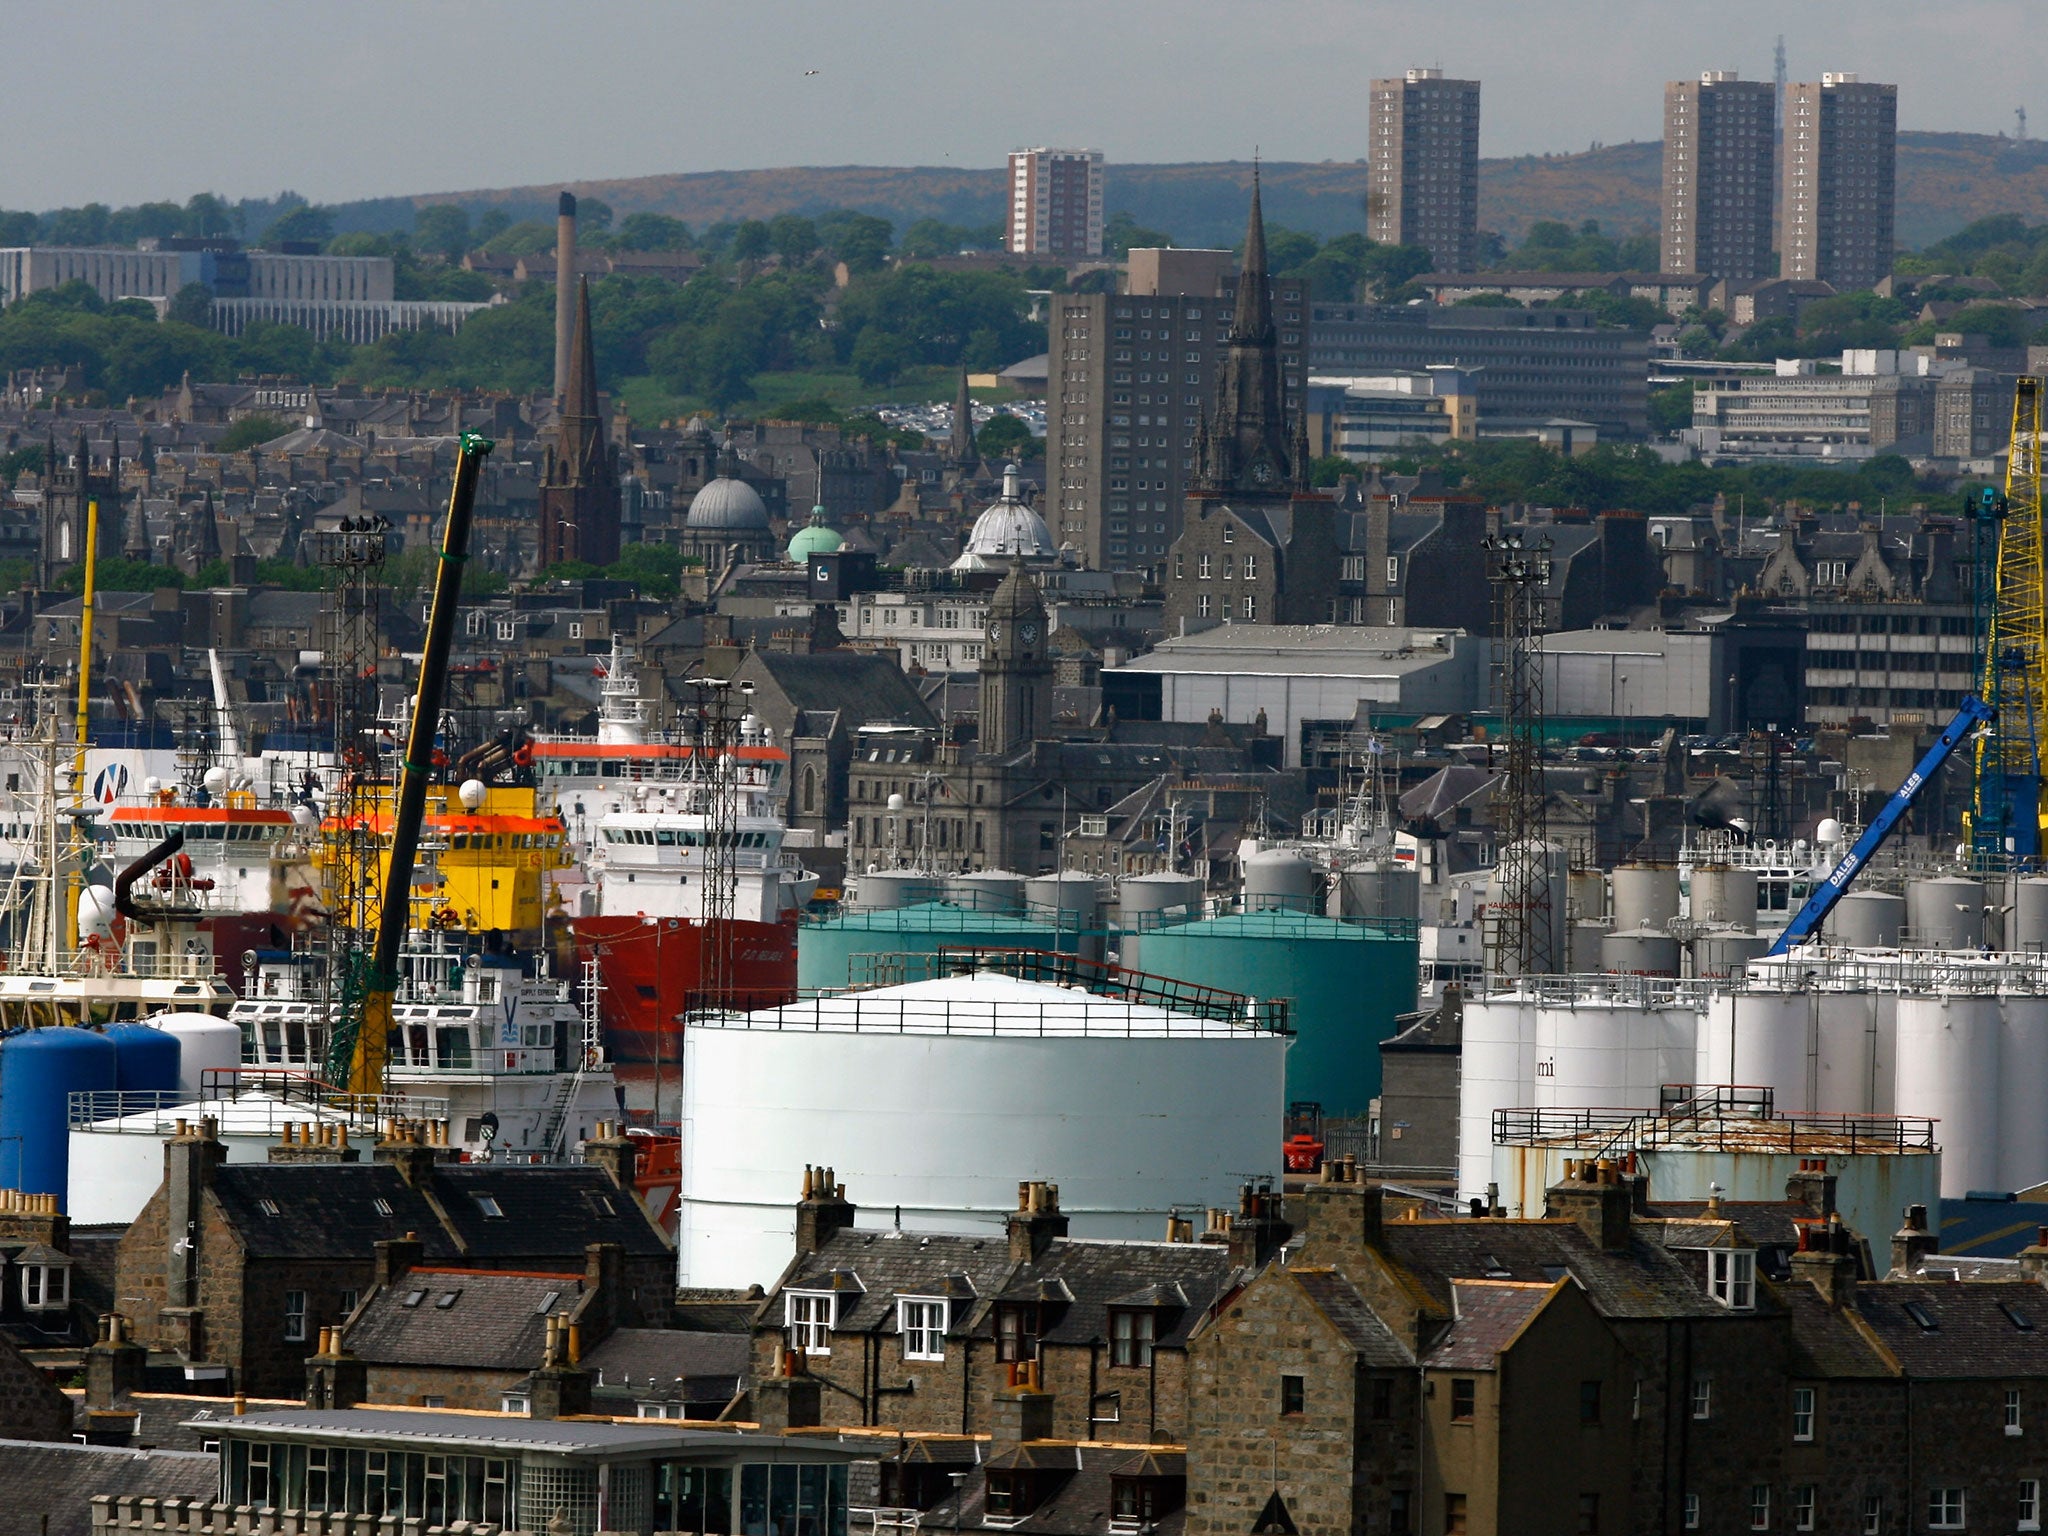 Nicola Sturgeon wants a deal to help industry in Aberdeen